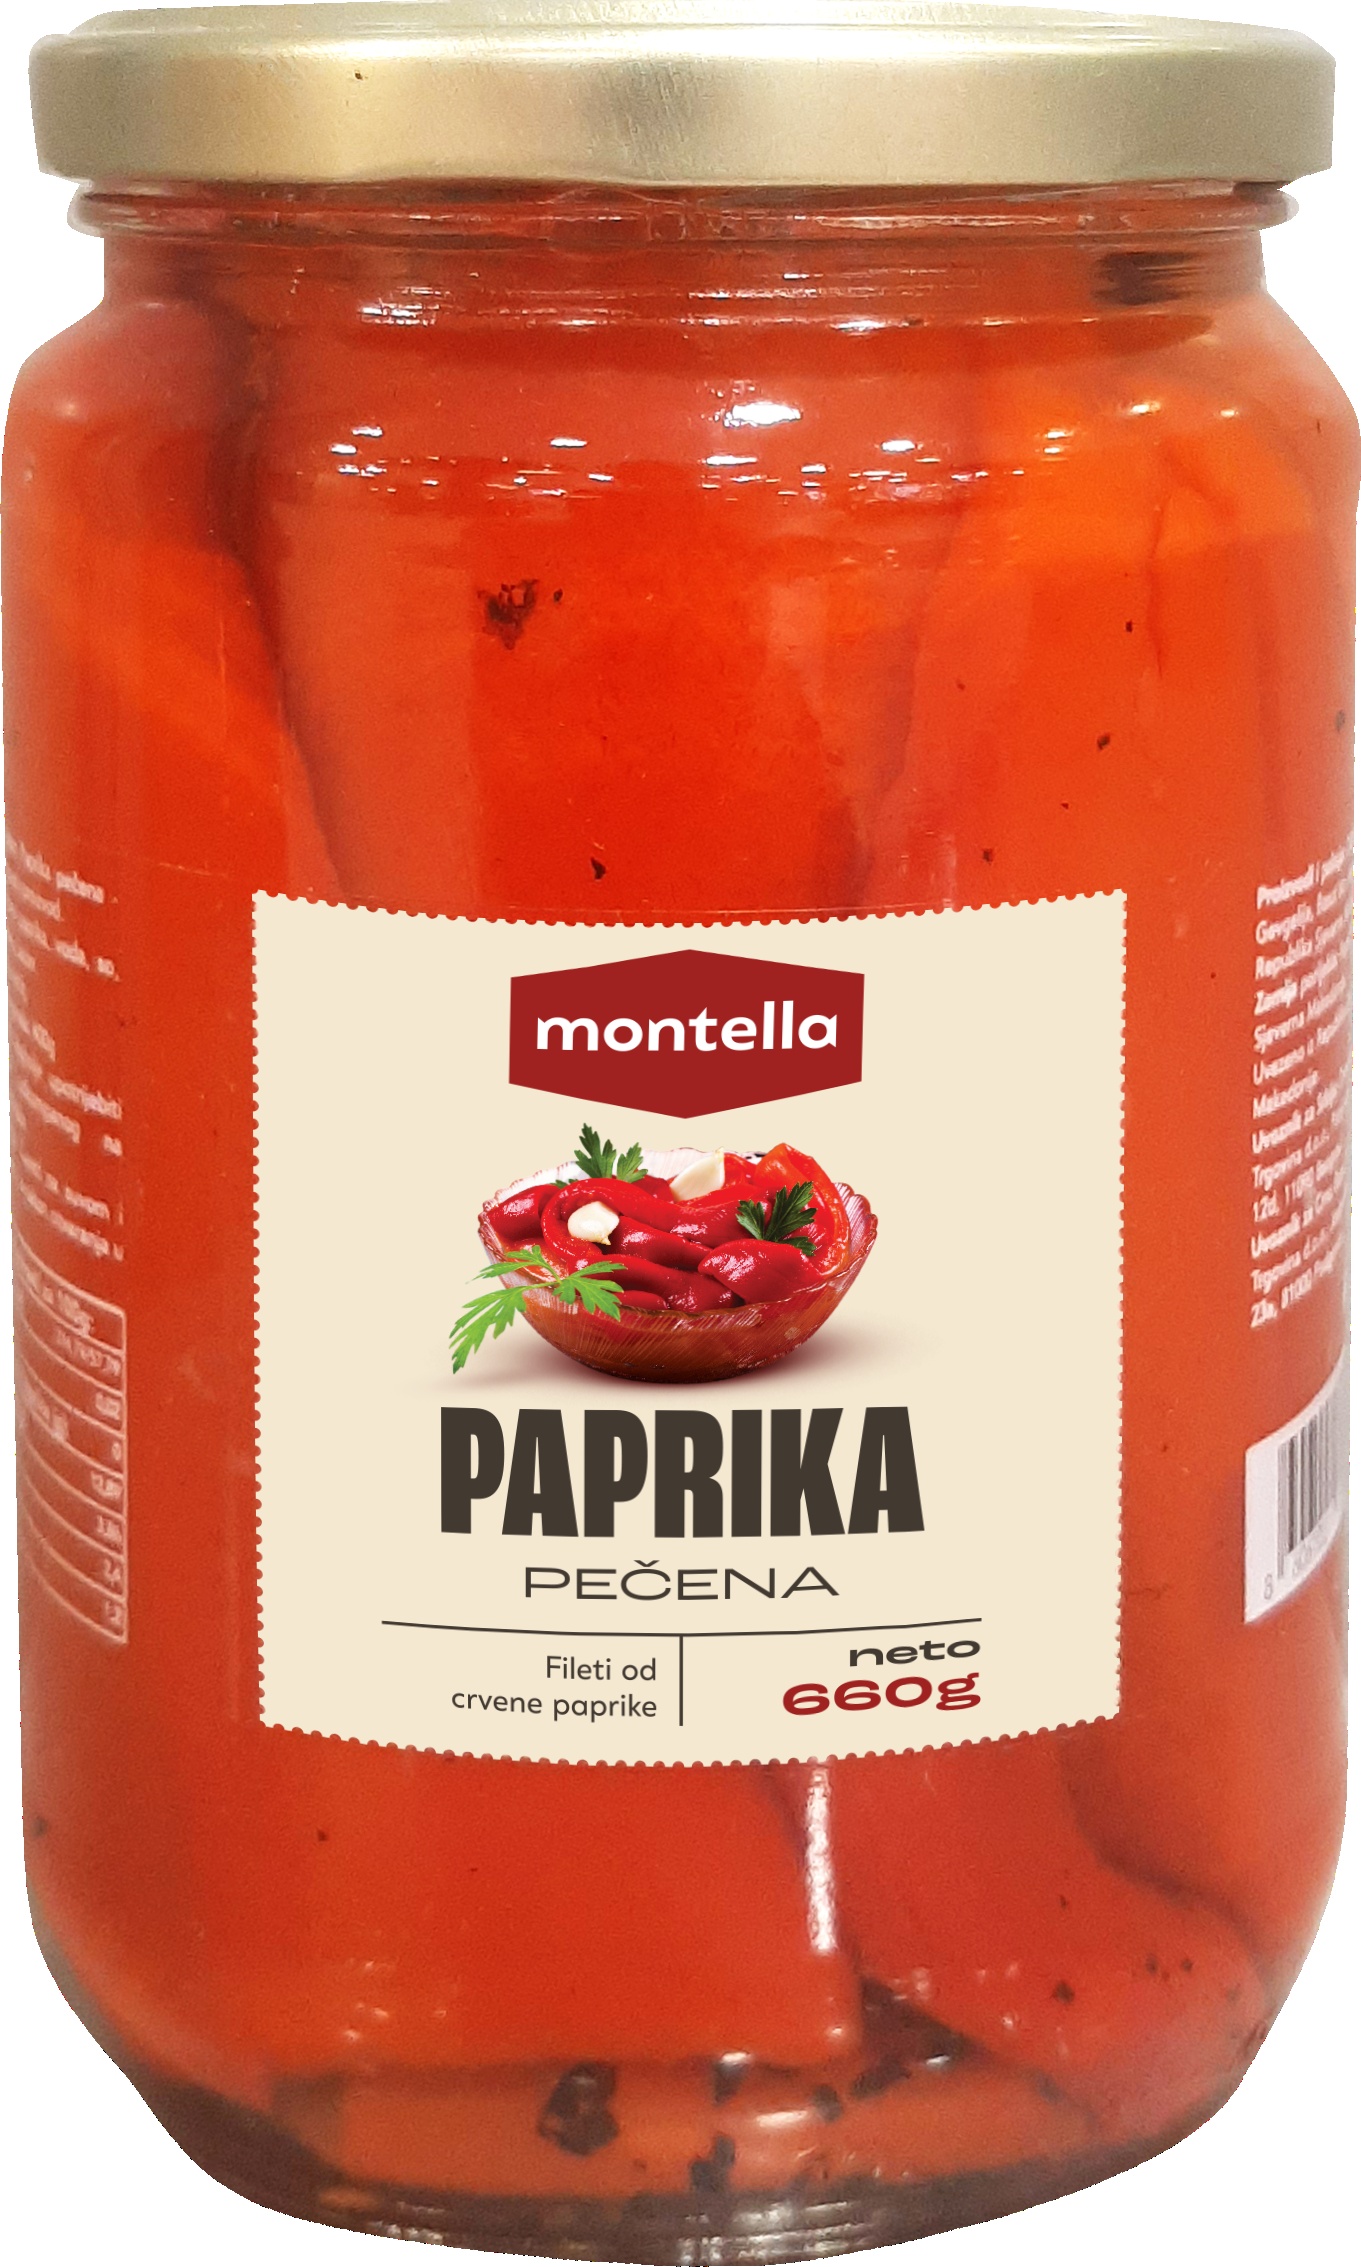 Slika za Paprika crvena pečena fileti Montella 660g